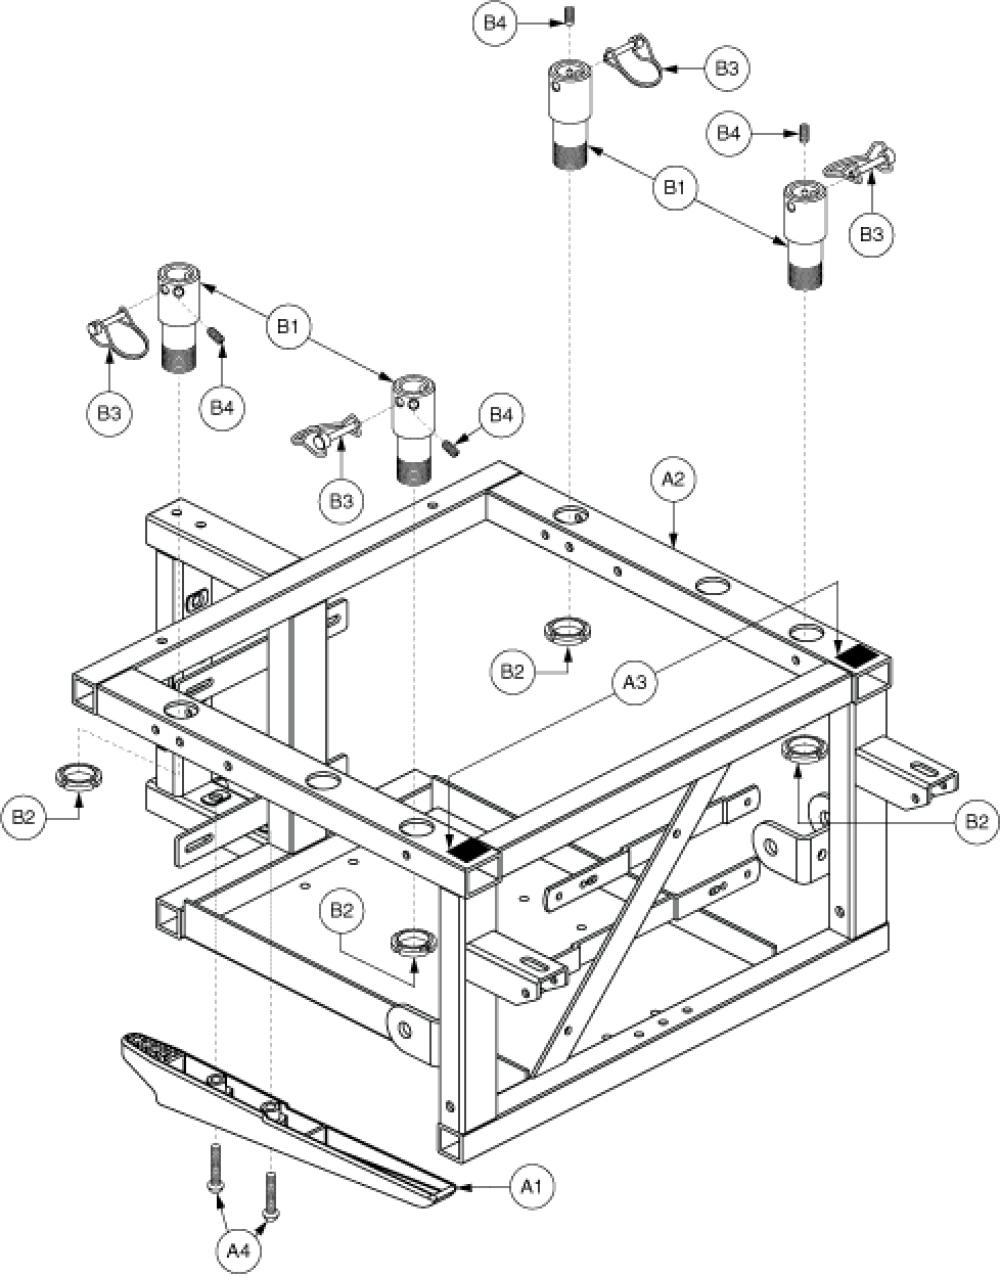 Main Frame Assembly - Gen. 2 parts diagram